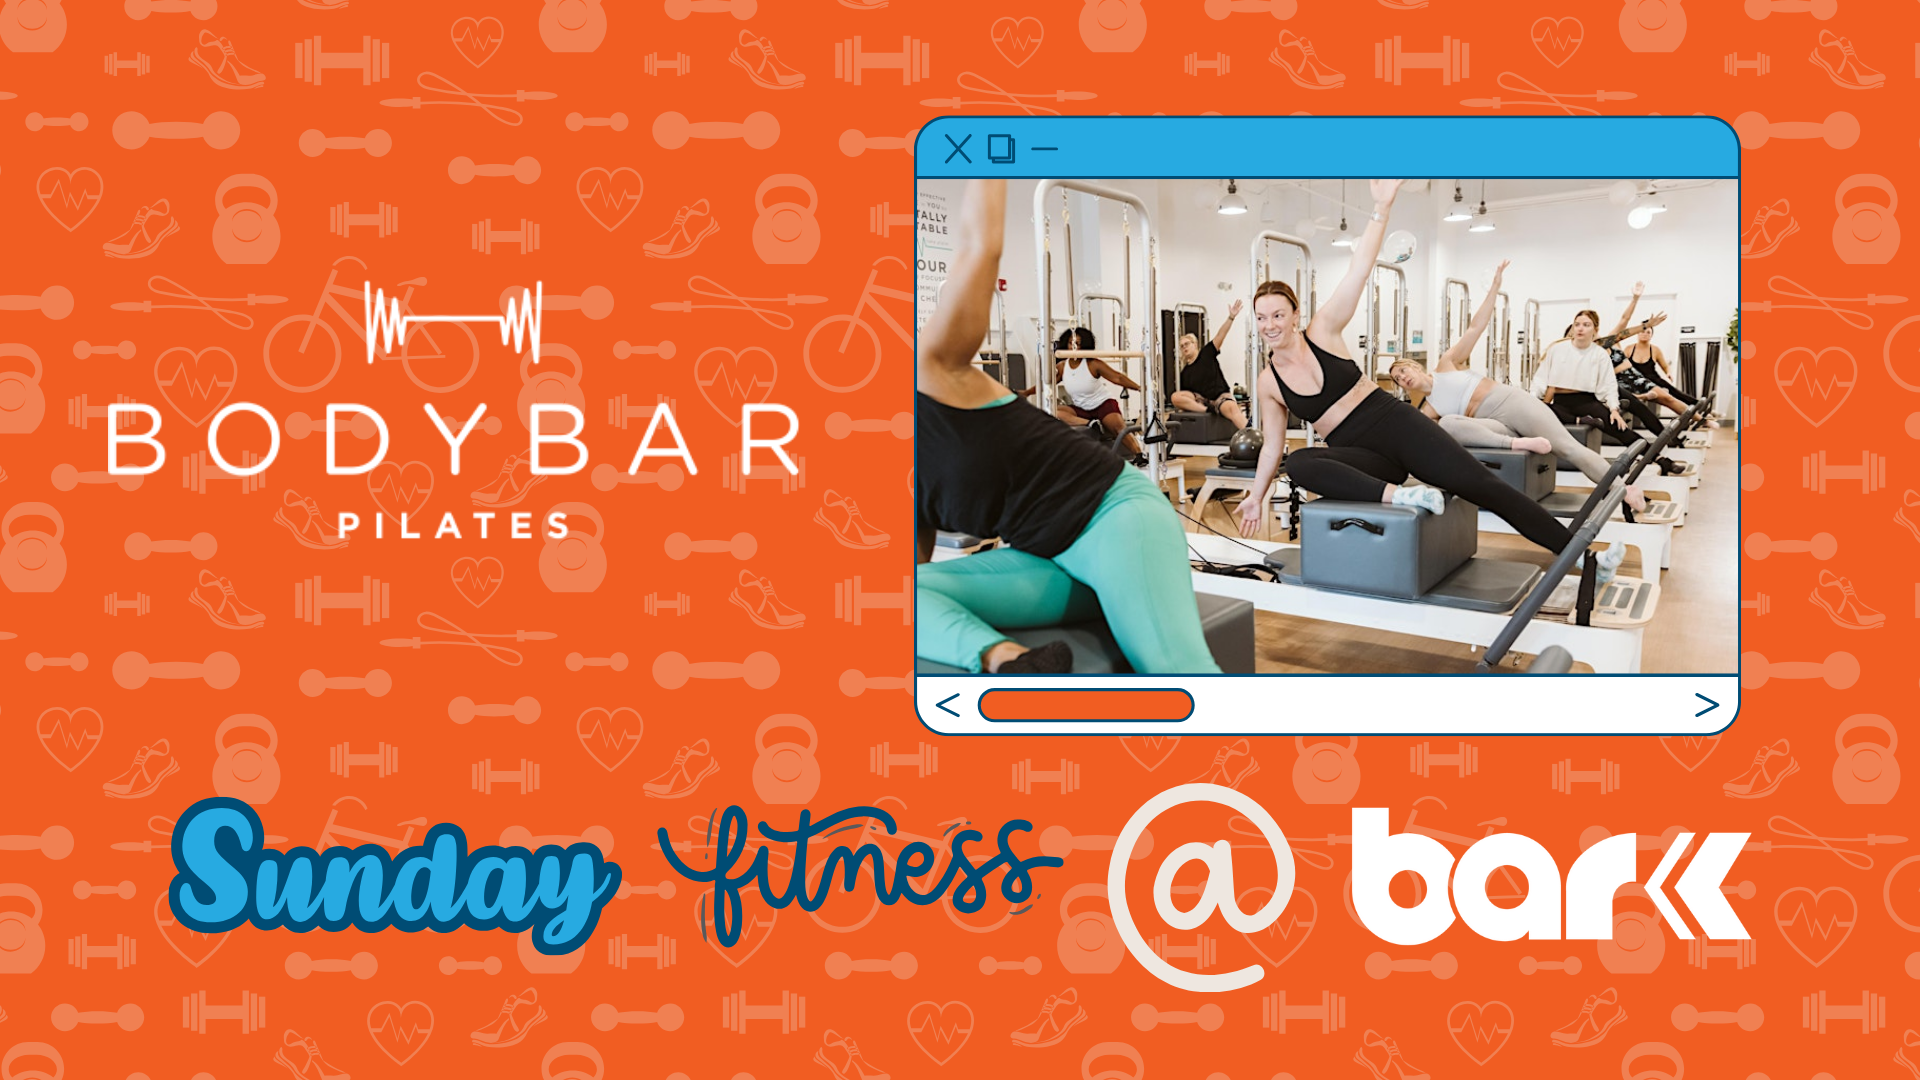 Bodybar pilates at bar K for Sunday Fitness